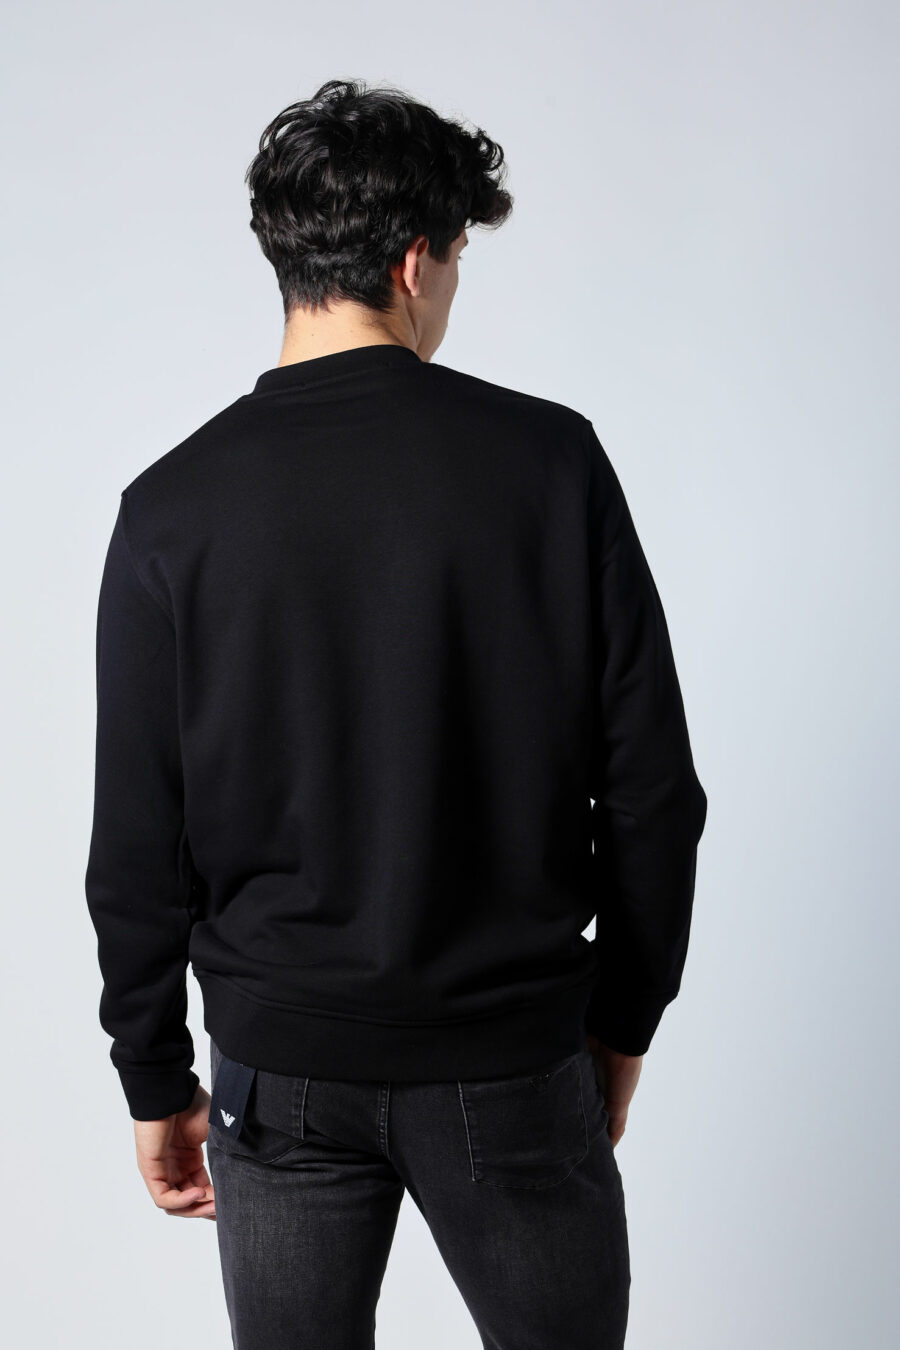 Schwarzes Sweatshirt mit einfarbigem Gummi-Maxi-Logo - Untitled Catalog 05706